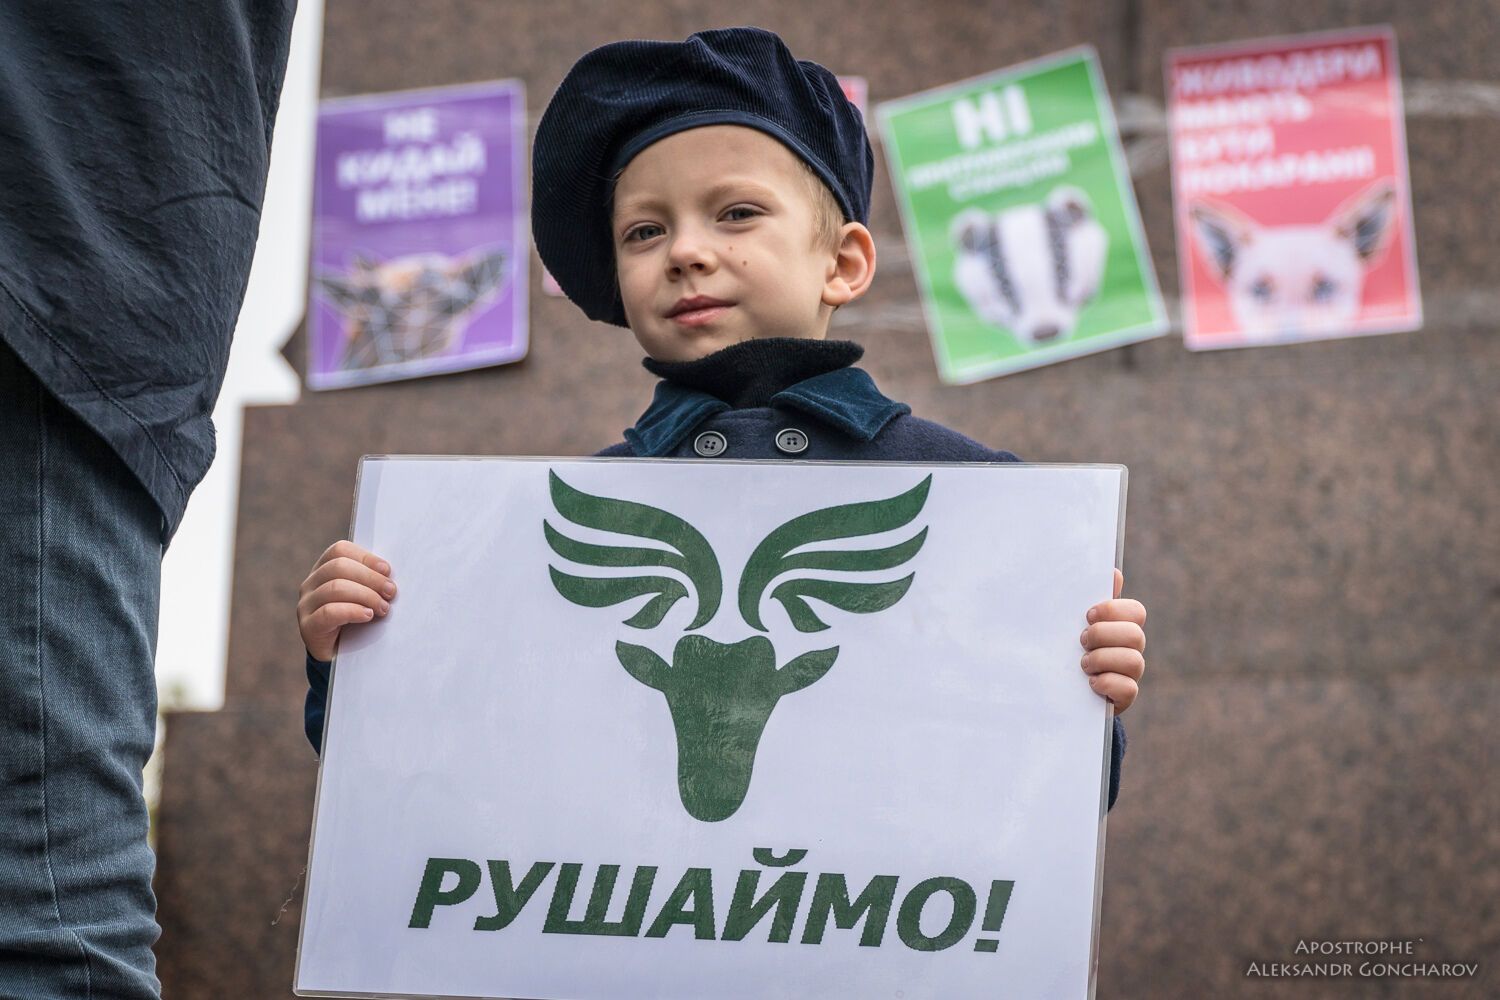 "Мене вбили твої розваги": у Києві пройшов гучний Марш за права тварин